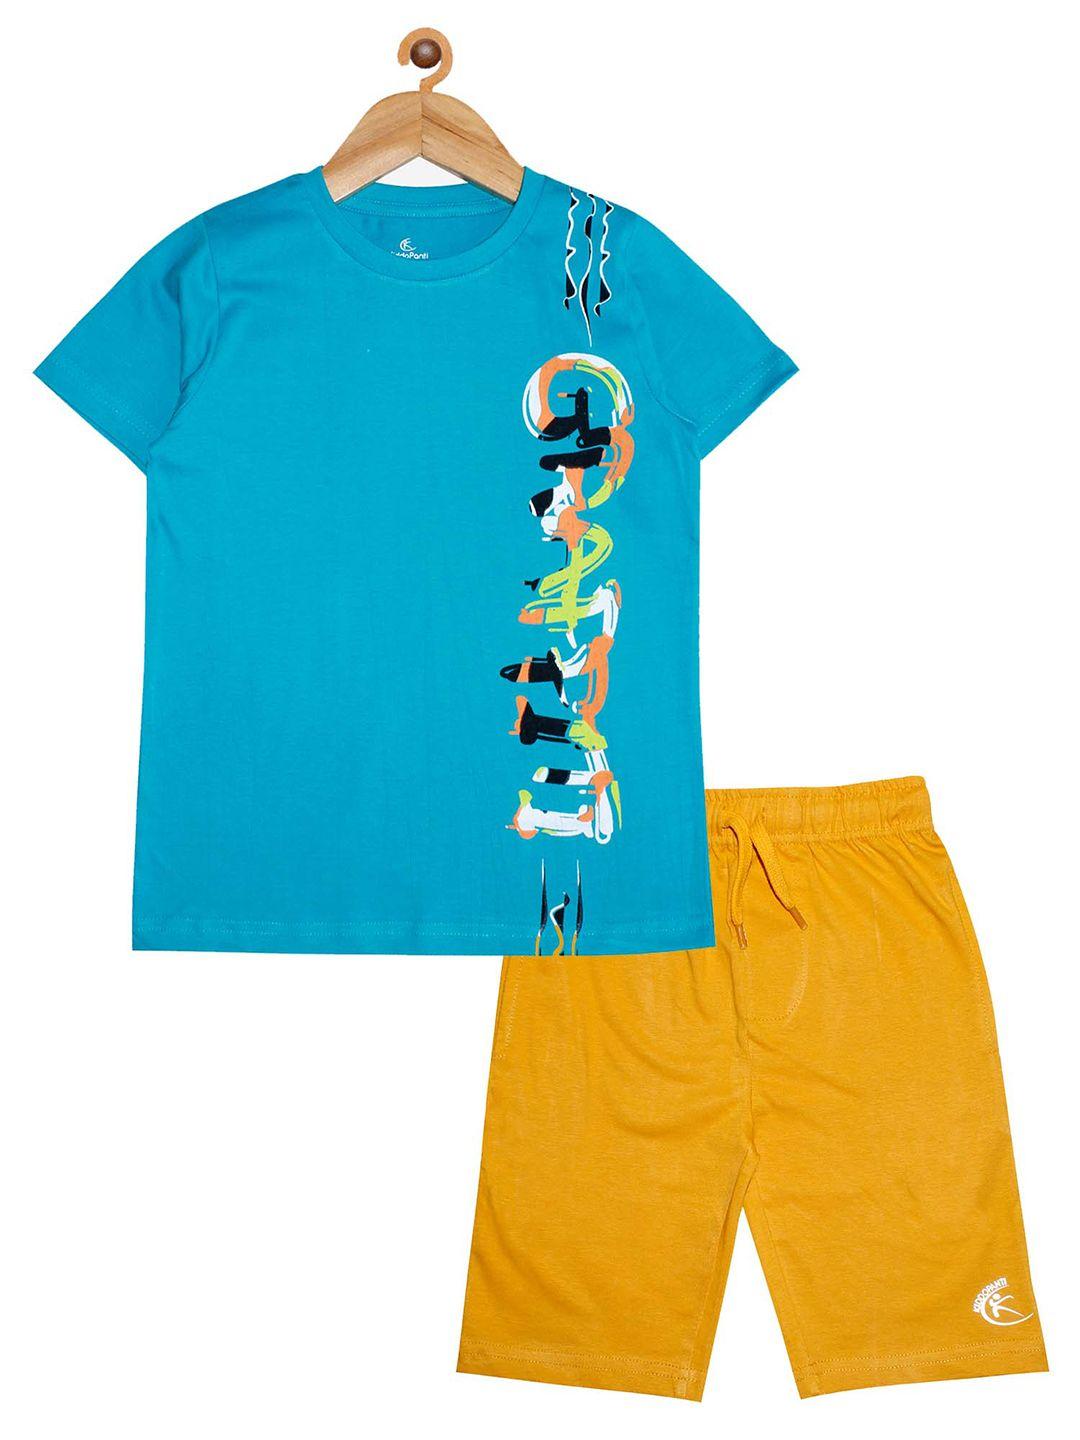 KiddoPanti Boys Teal & Mustard Printed Pure Cotton T-shirt with Shorts